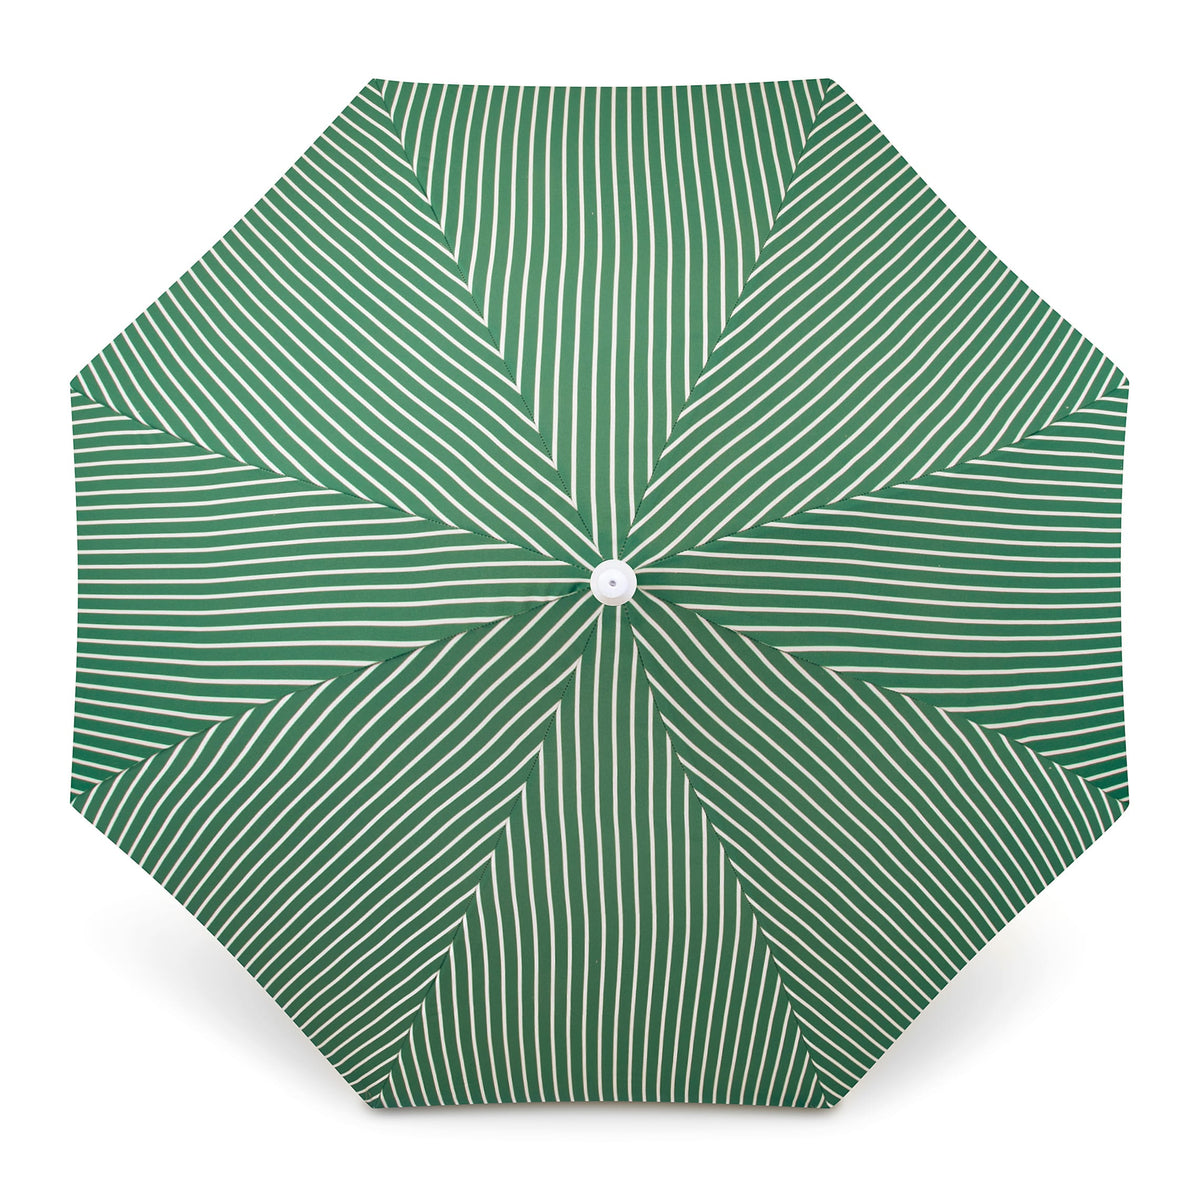 Mineral Beach Umbrella